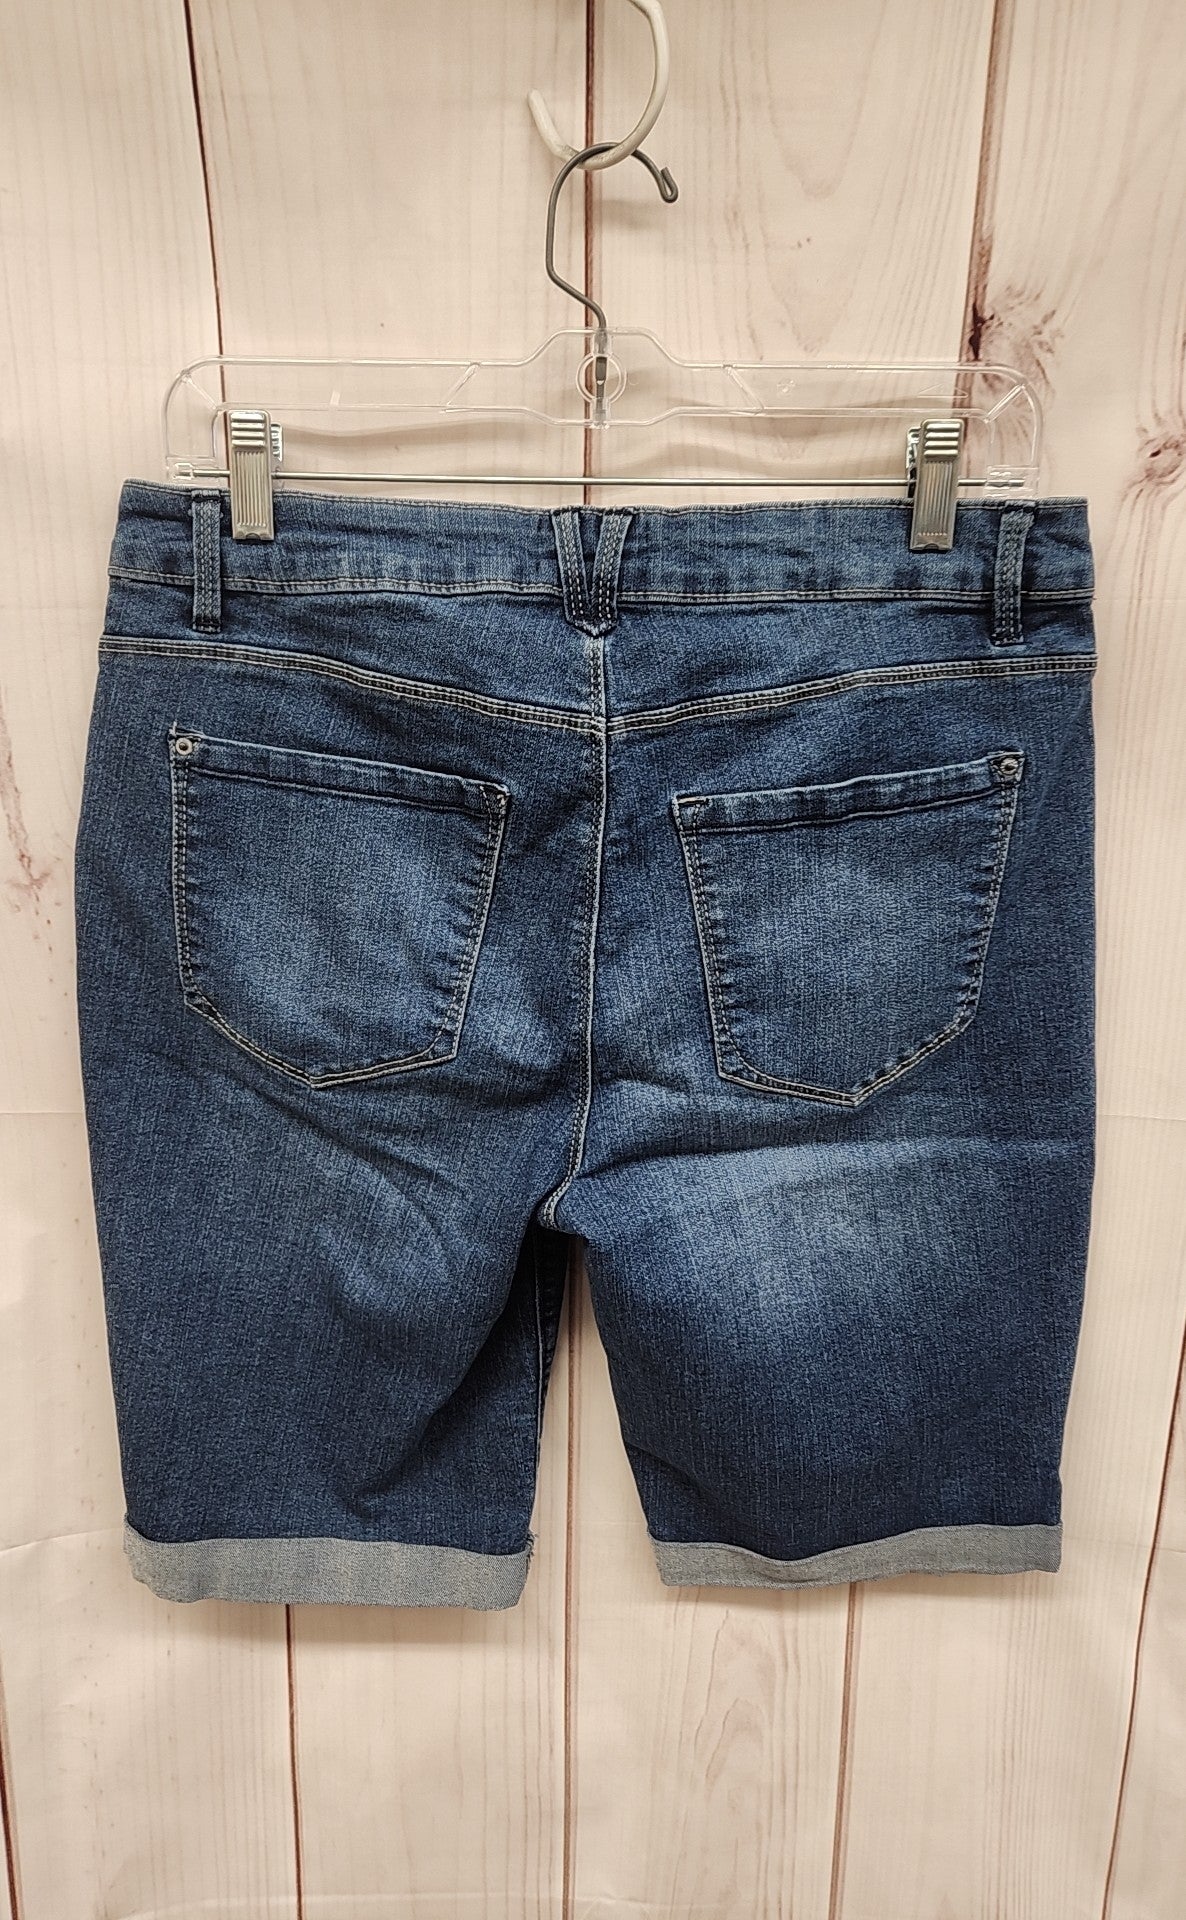 Curve Appeal Women's Size 30 (9-10) Blue Shorts